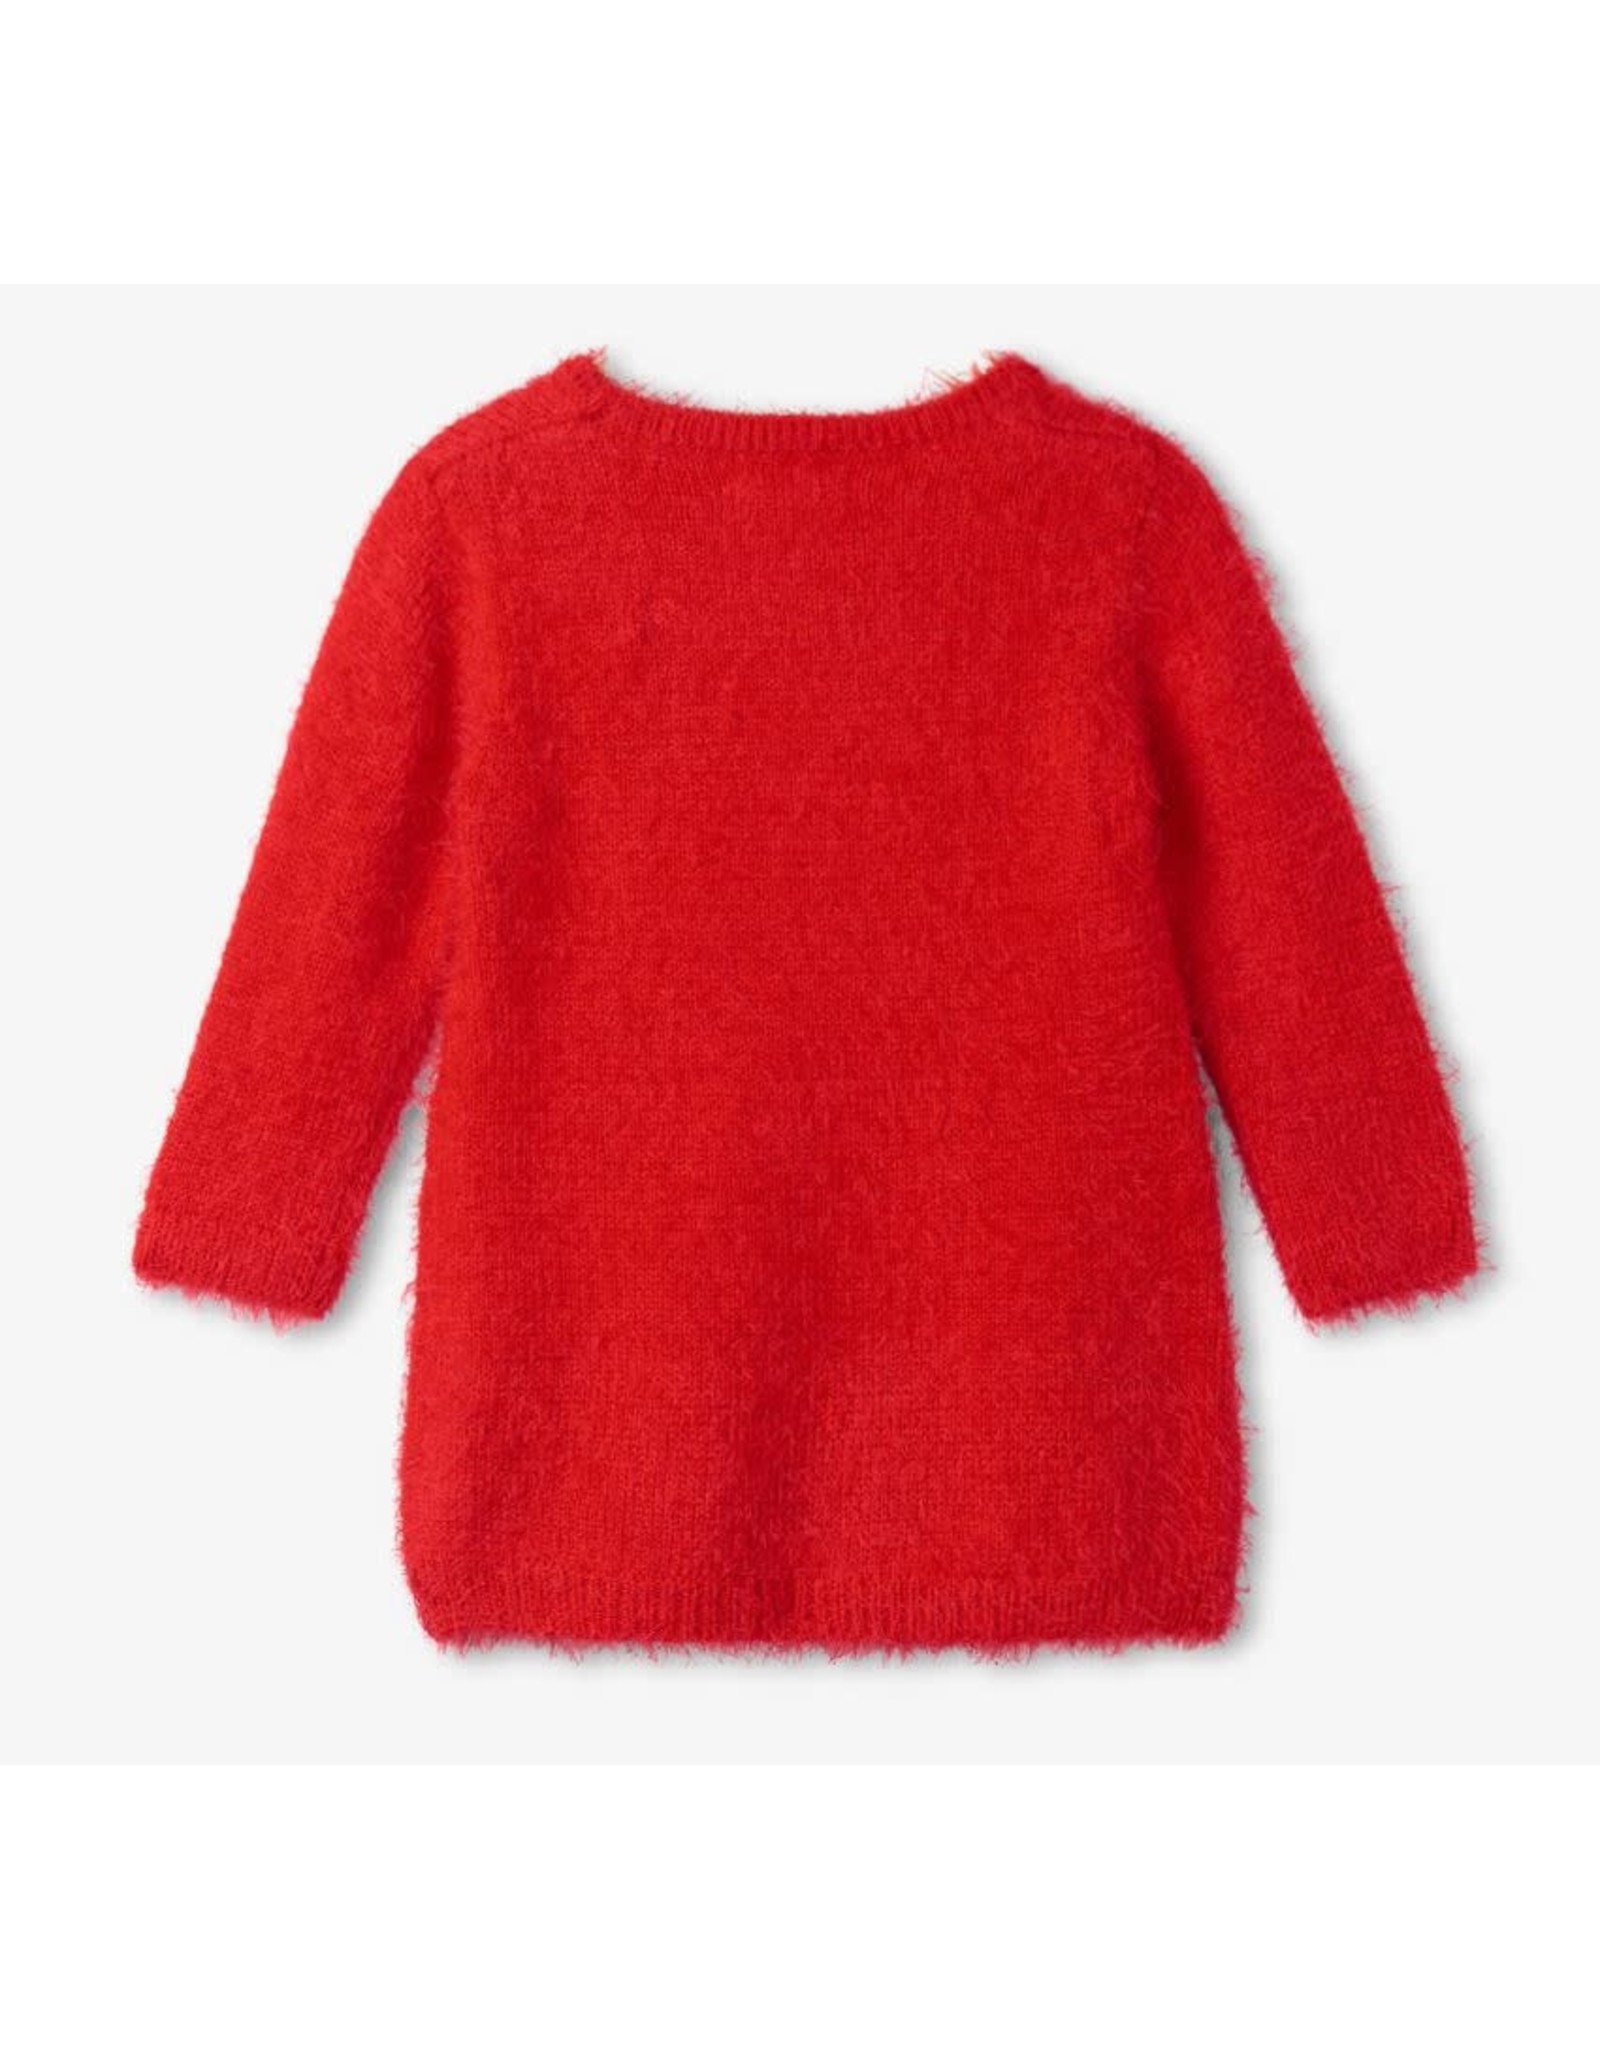 Hatley Holiday Fuzzy Sweater Dress